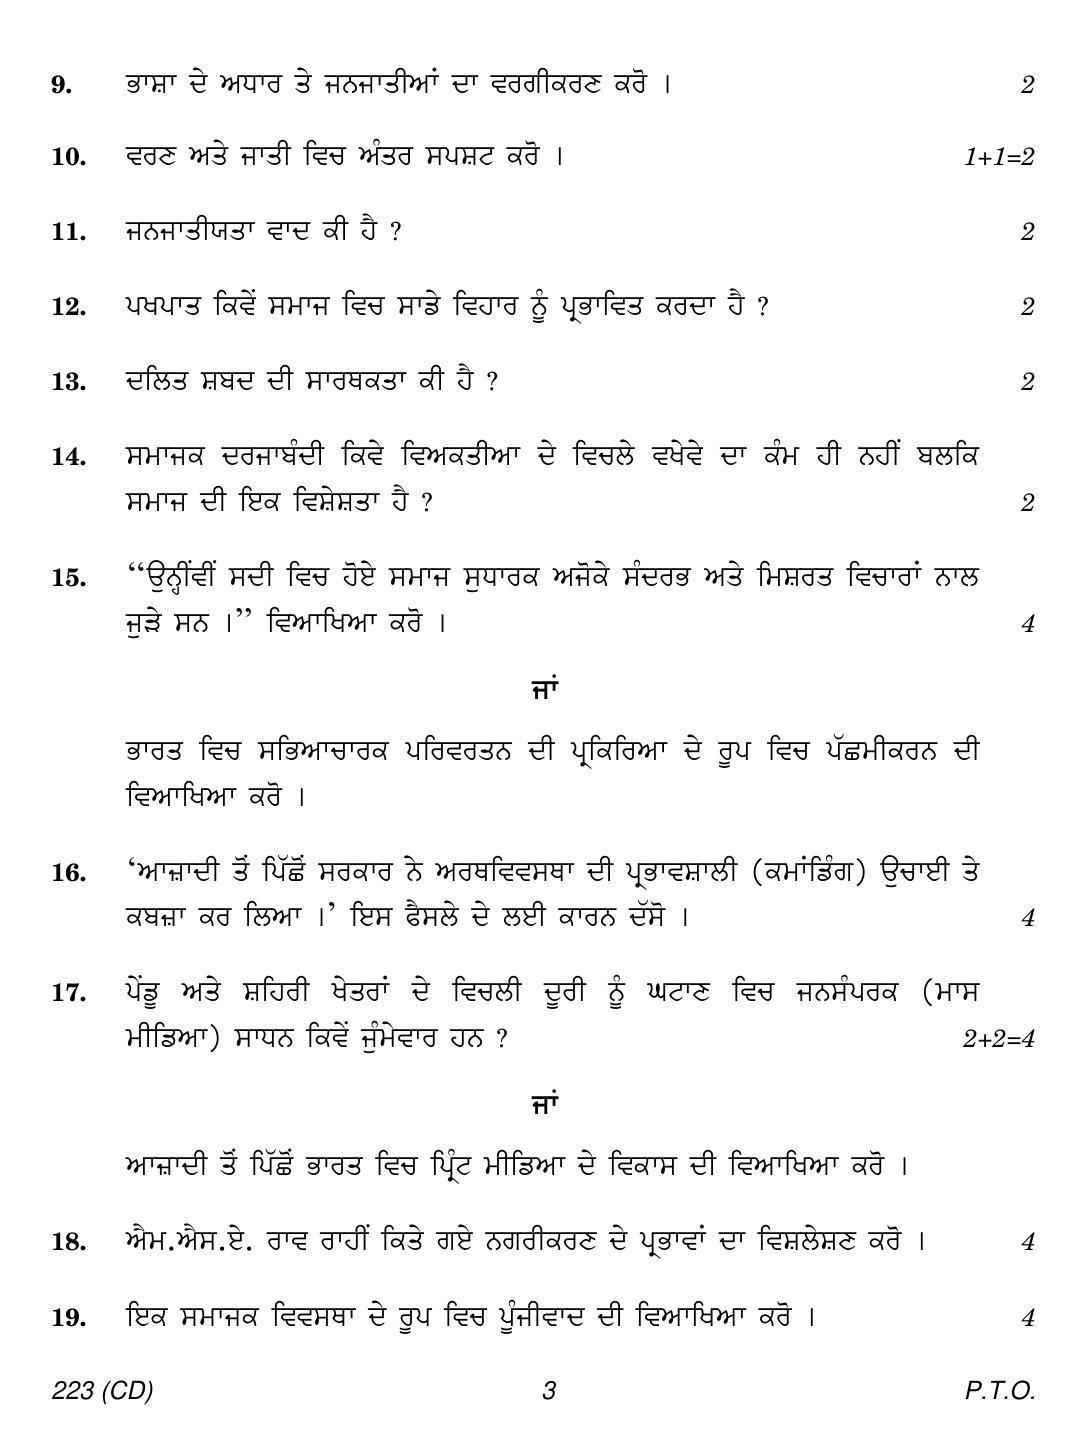 CBSE Class 12 223 (Sociology Punjabi CD) 2018 Question Paper - Page 3